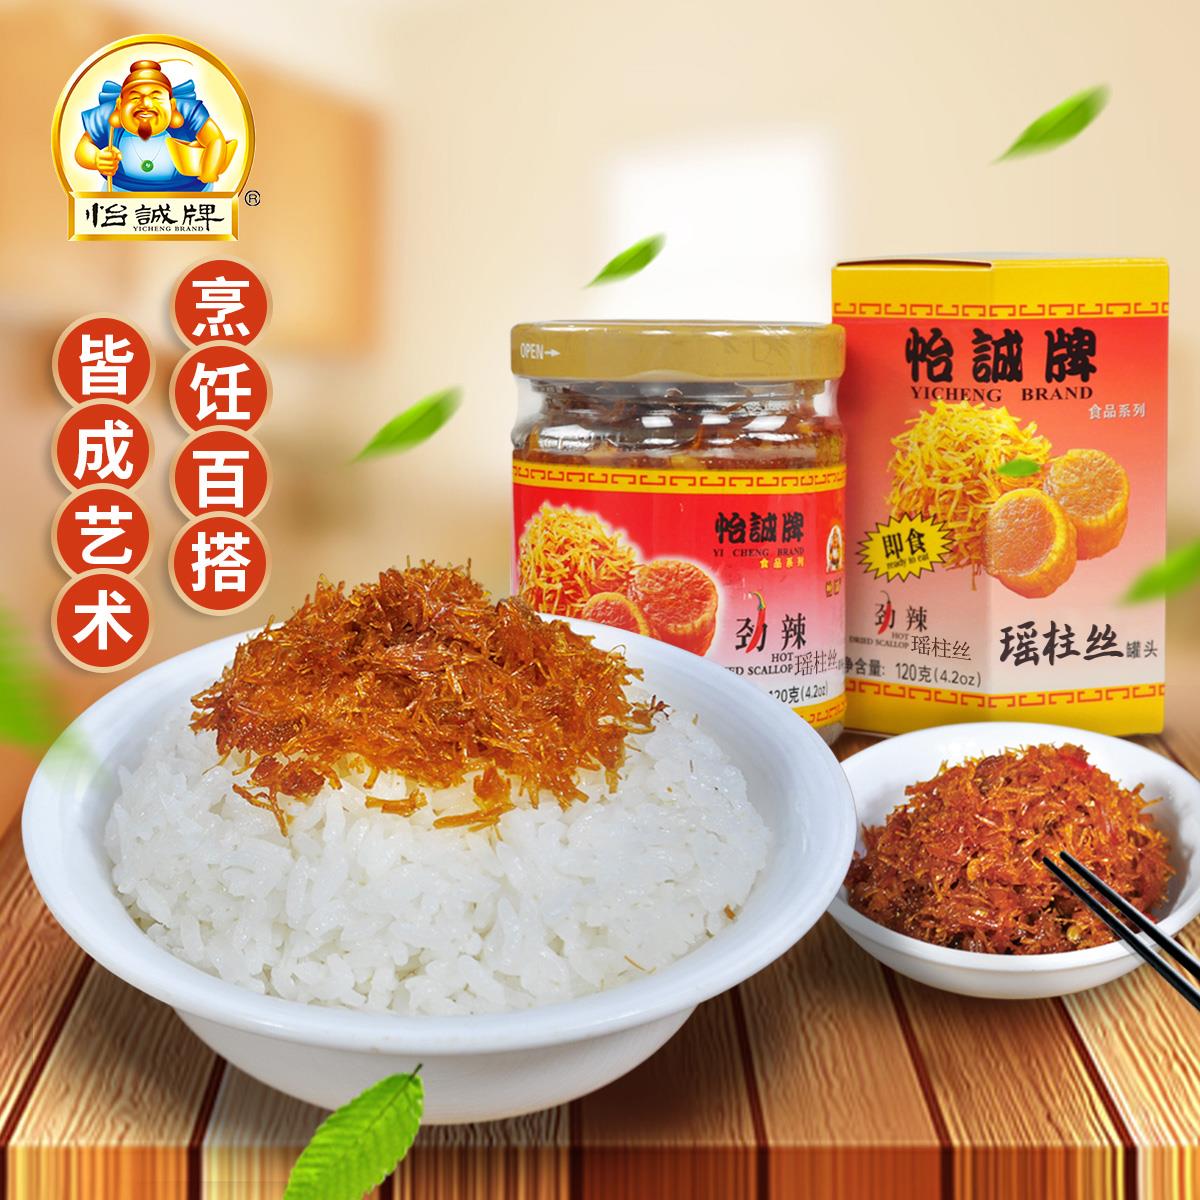 HENG'S 爱加料 XO瑶柱酱 Crispy XO sauce 180g - Bak Lai Fish Ball Food Industries